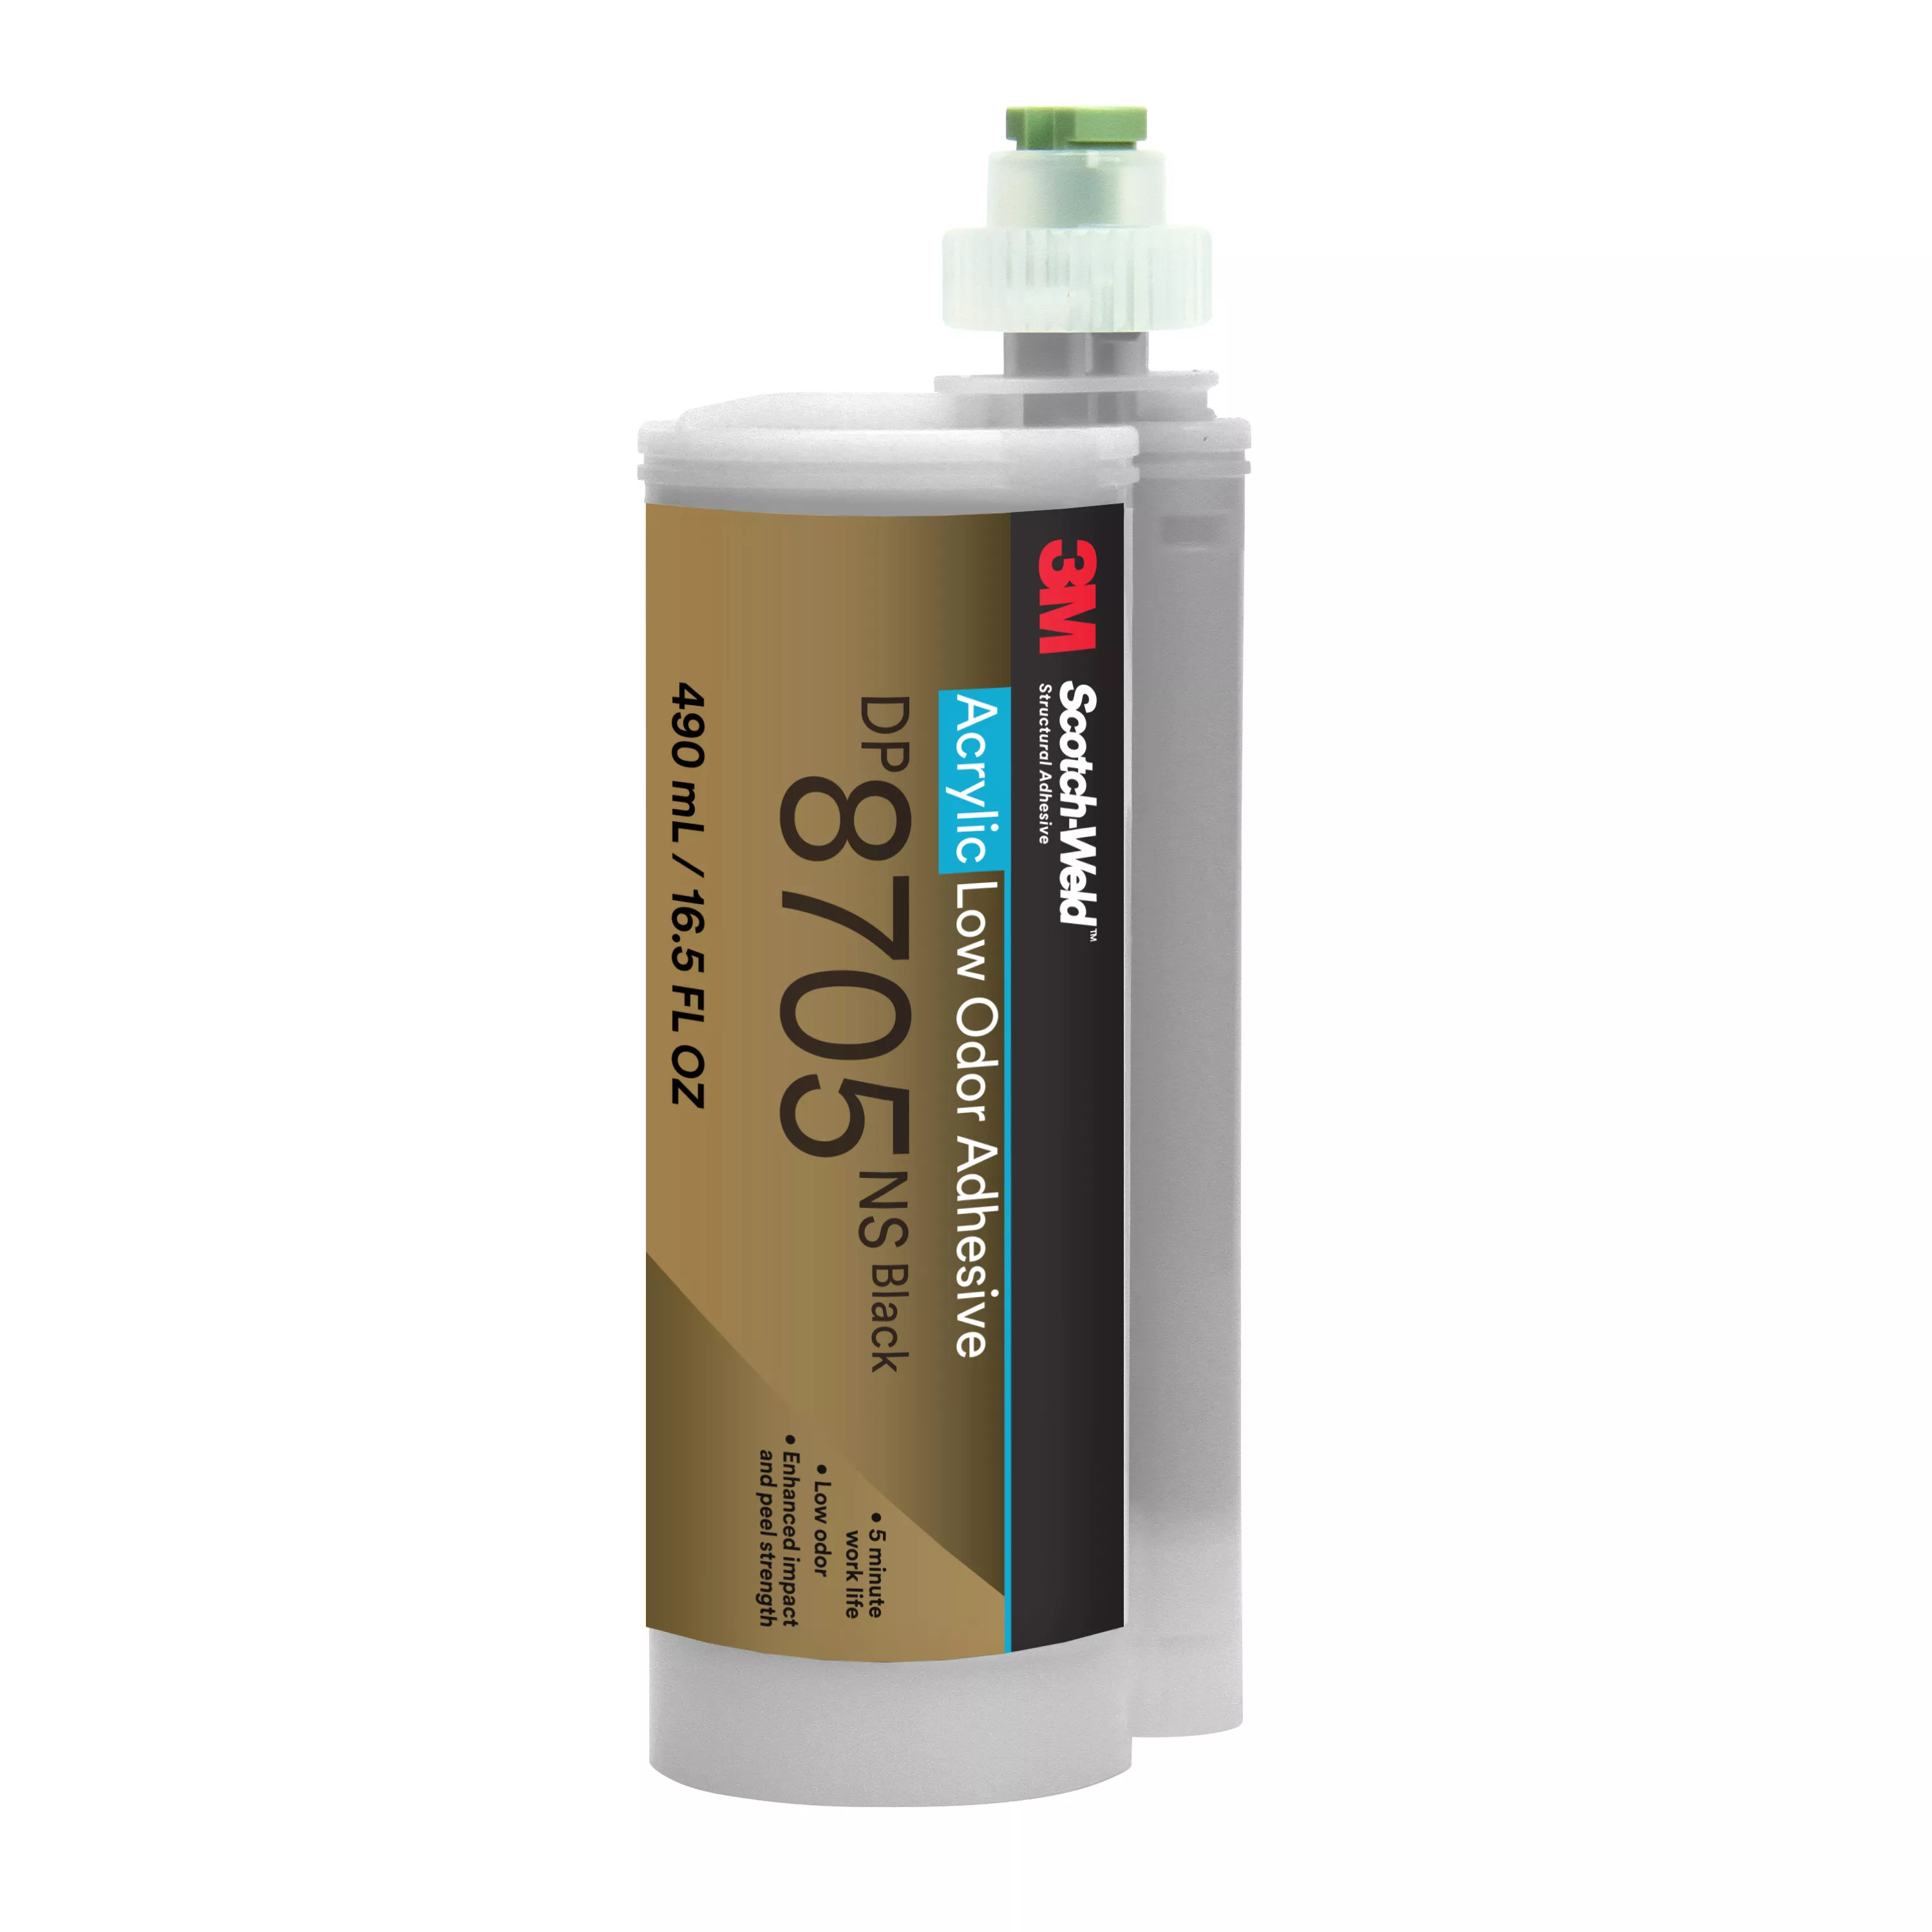 3M™ Scotch-Weld™ Low Odor Acrylic Adhesive DP8705NS, Black, 490 mL
Duo-Pak, 6 Each/Case